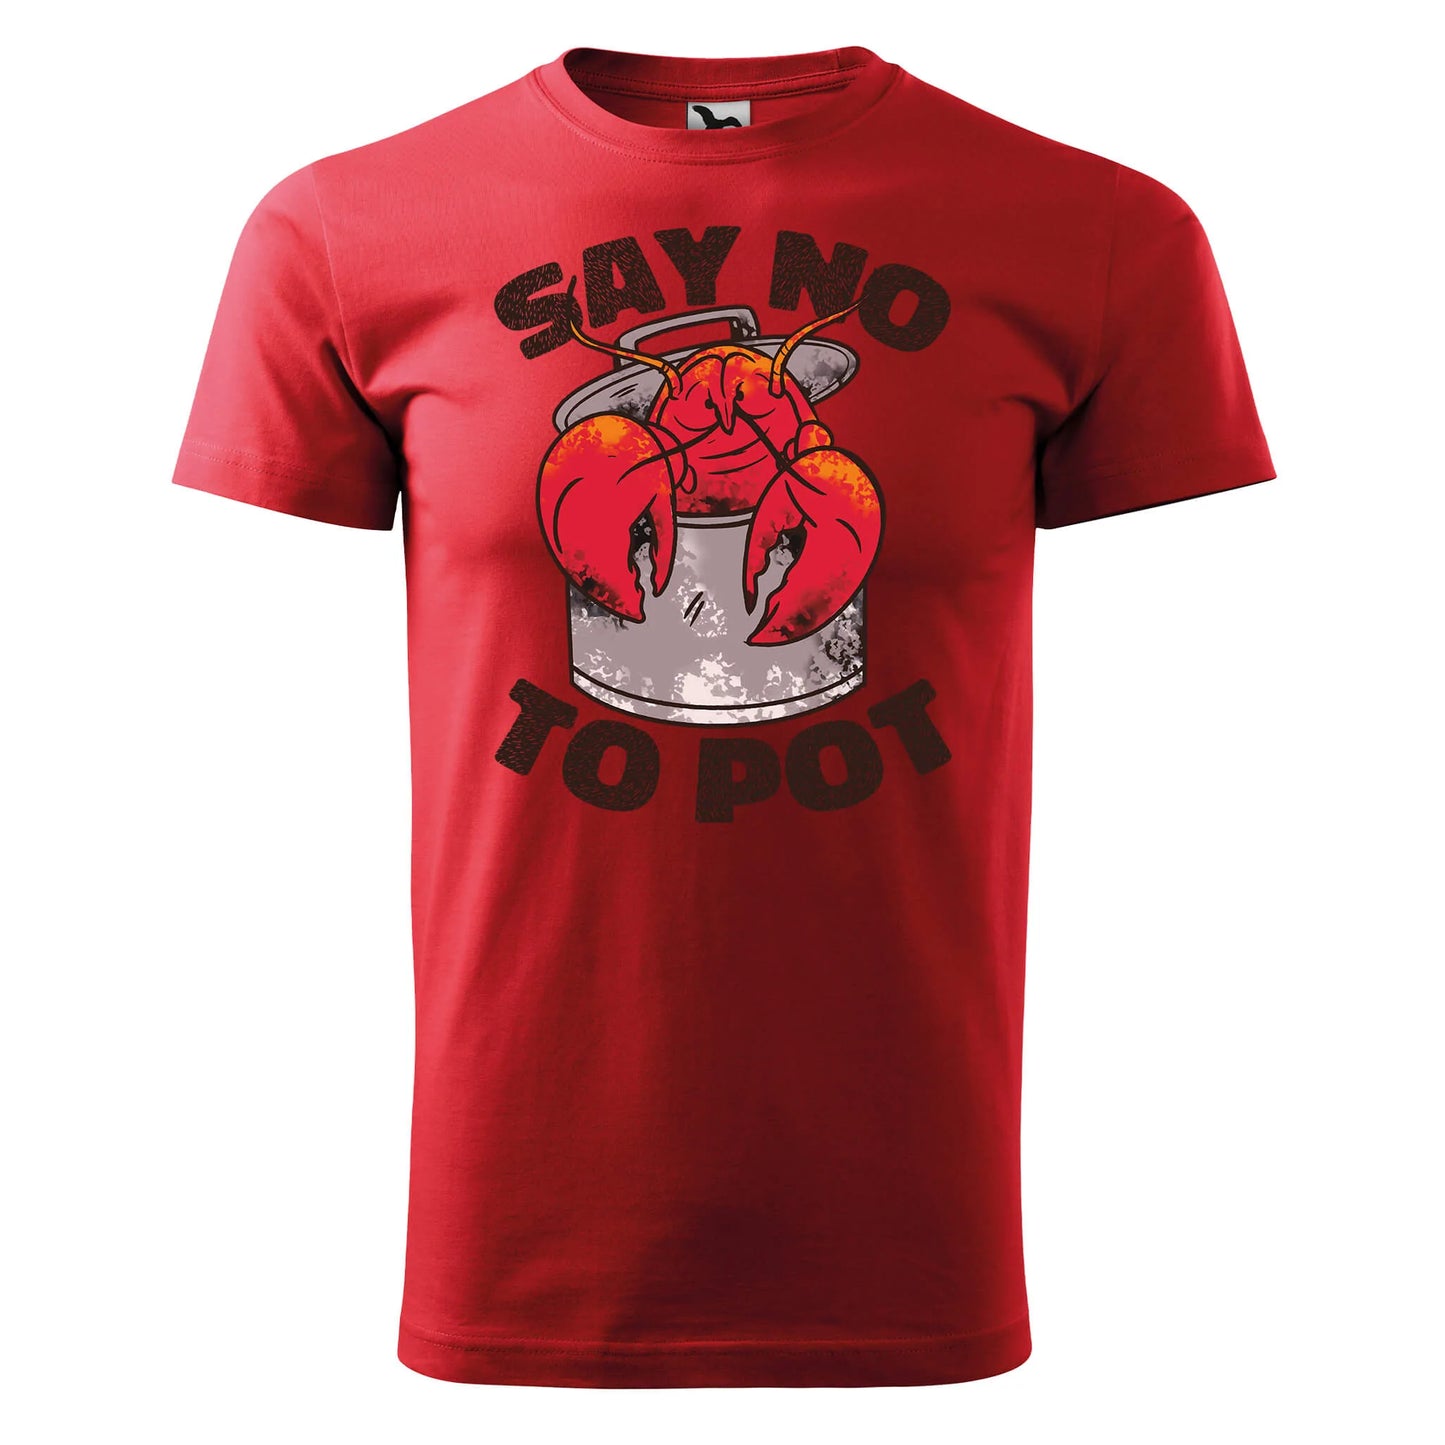 Say no to pot t-shirt - rvdesignprint